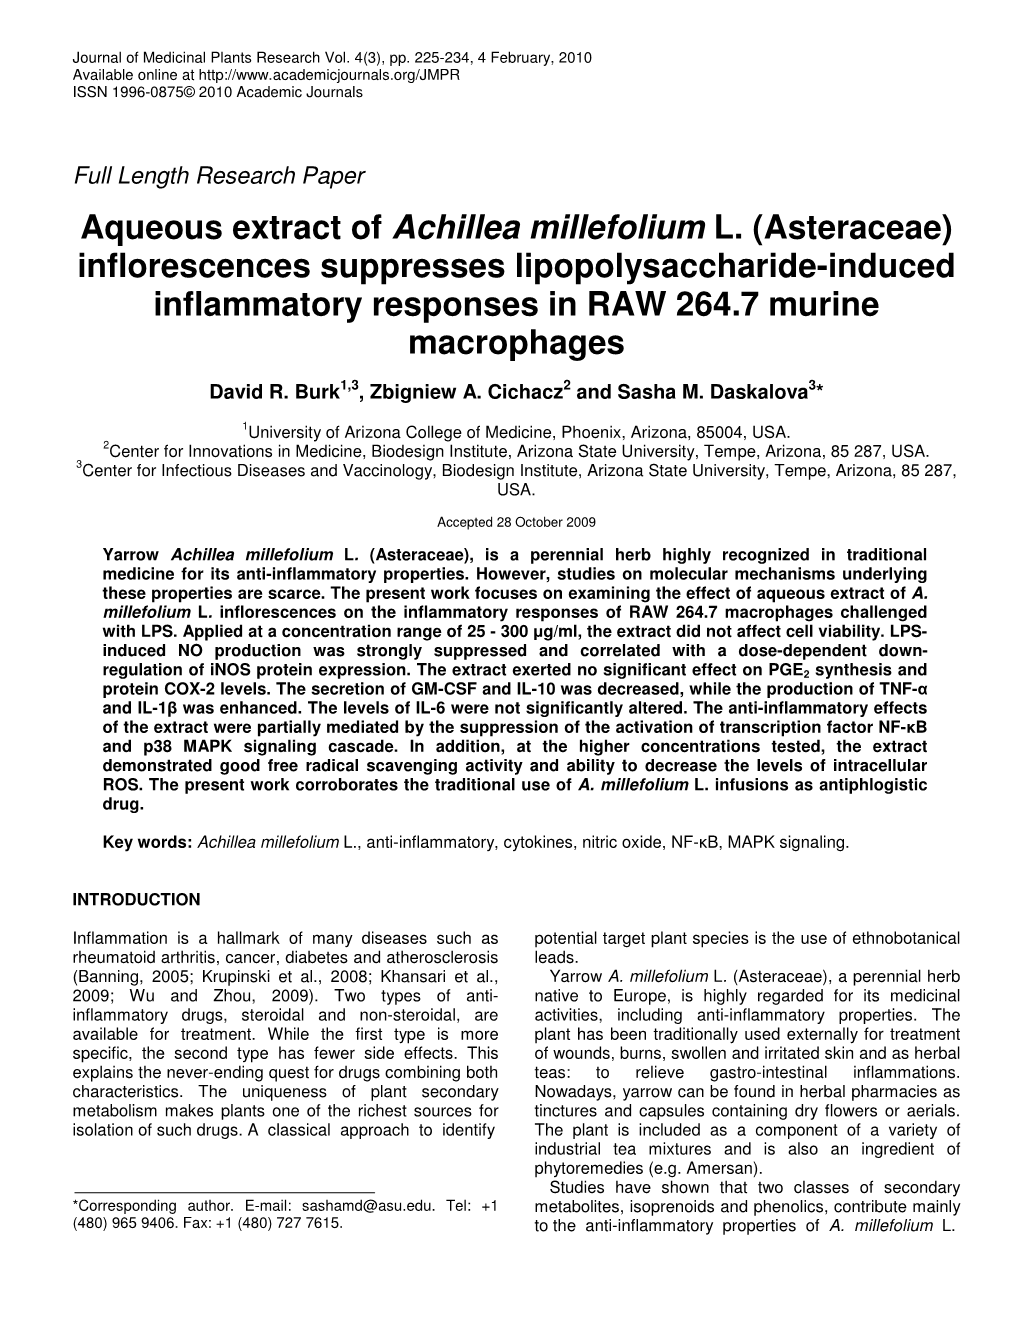 Aqueous Extract of Achillea Millefolium L. (Asteraceae) Inflorescences Suppresses Lipopolysaccharide-Induced Inflammatory Responses in RAW 264.7 Murine Macrophages